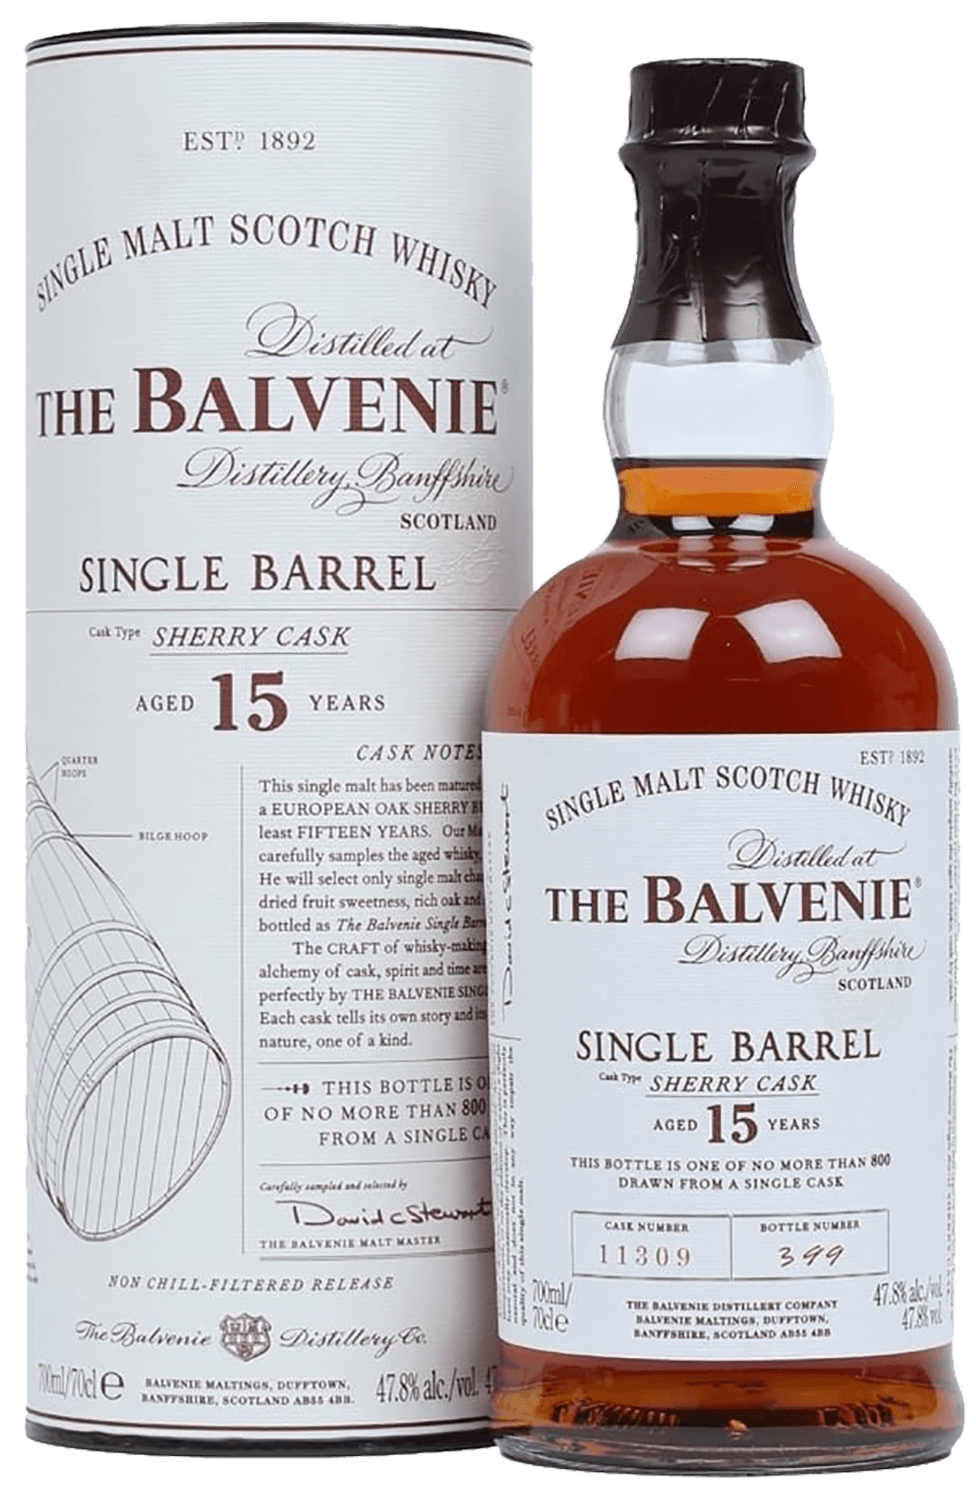 The Balvenie Single Barrel Sherry Cask 15 Years Old Single Malt Scotch Whisky (gift box) the balvenie 1997 single malt scotch whisky gift box